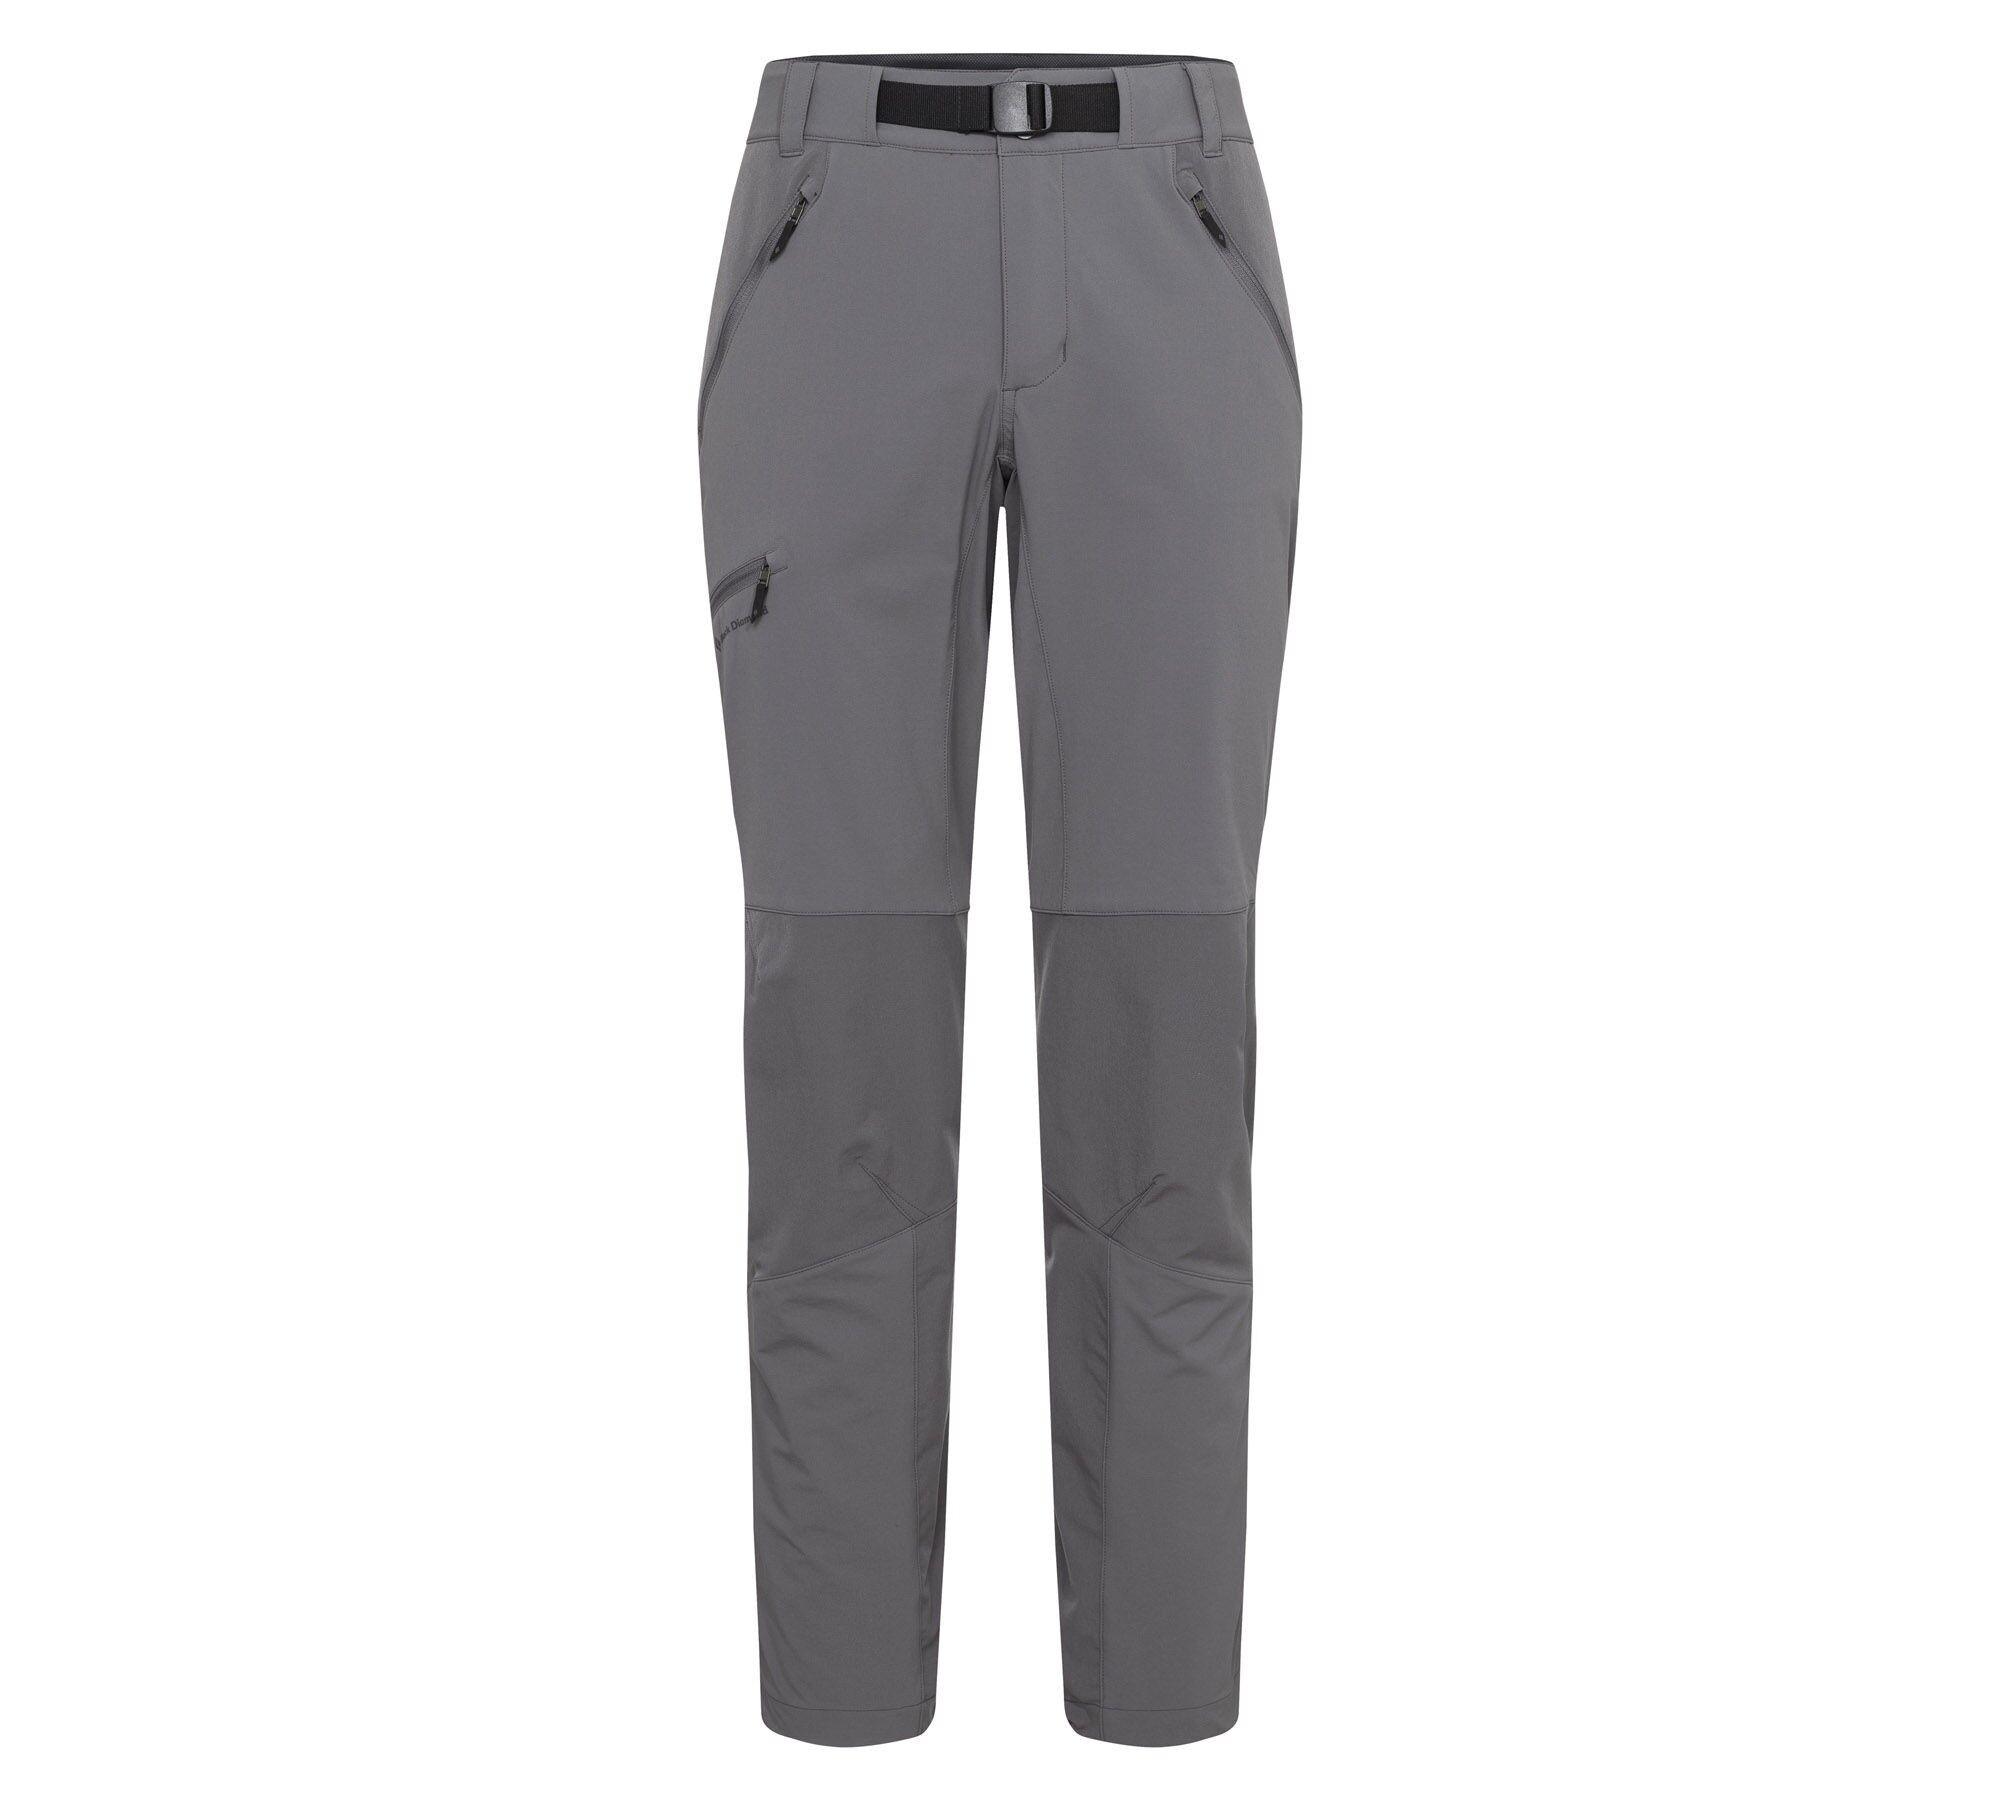 Black Diamond Swift Pants - Mountaineering trousers - Men's